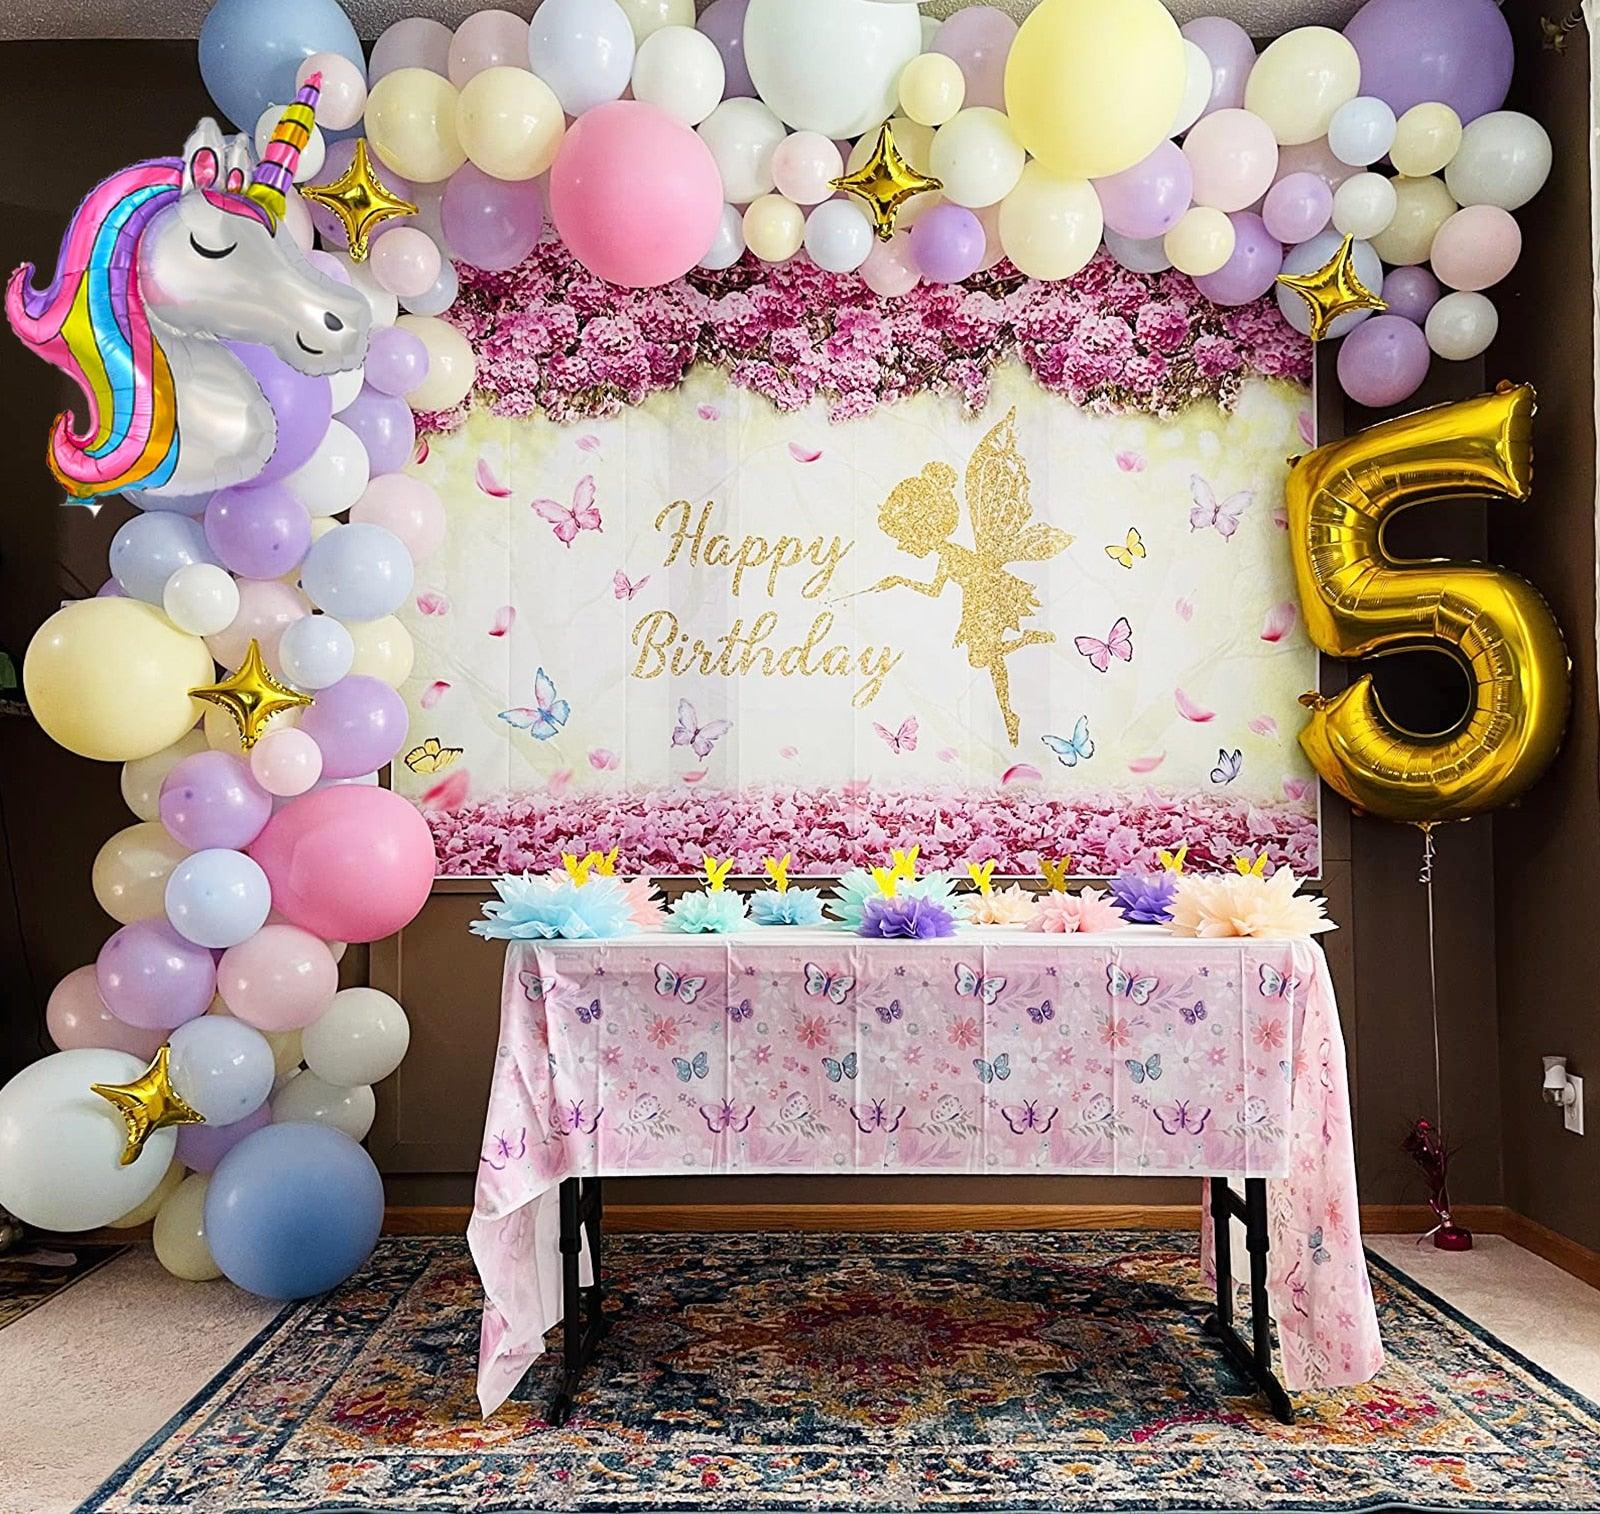 Unicorn balloon garland with a Happy Birthday background